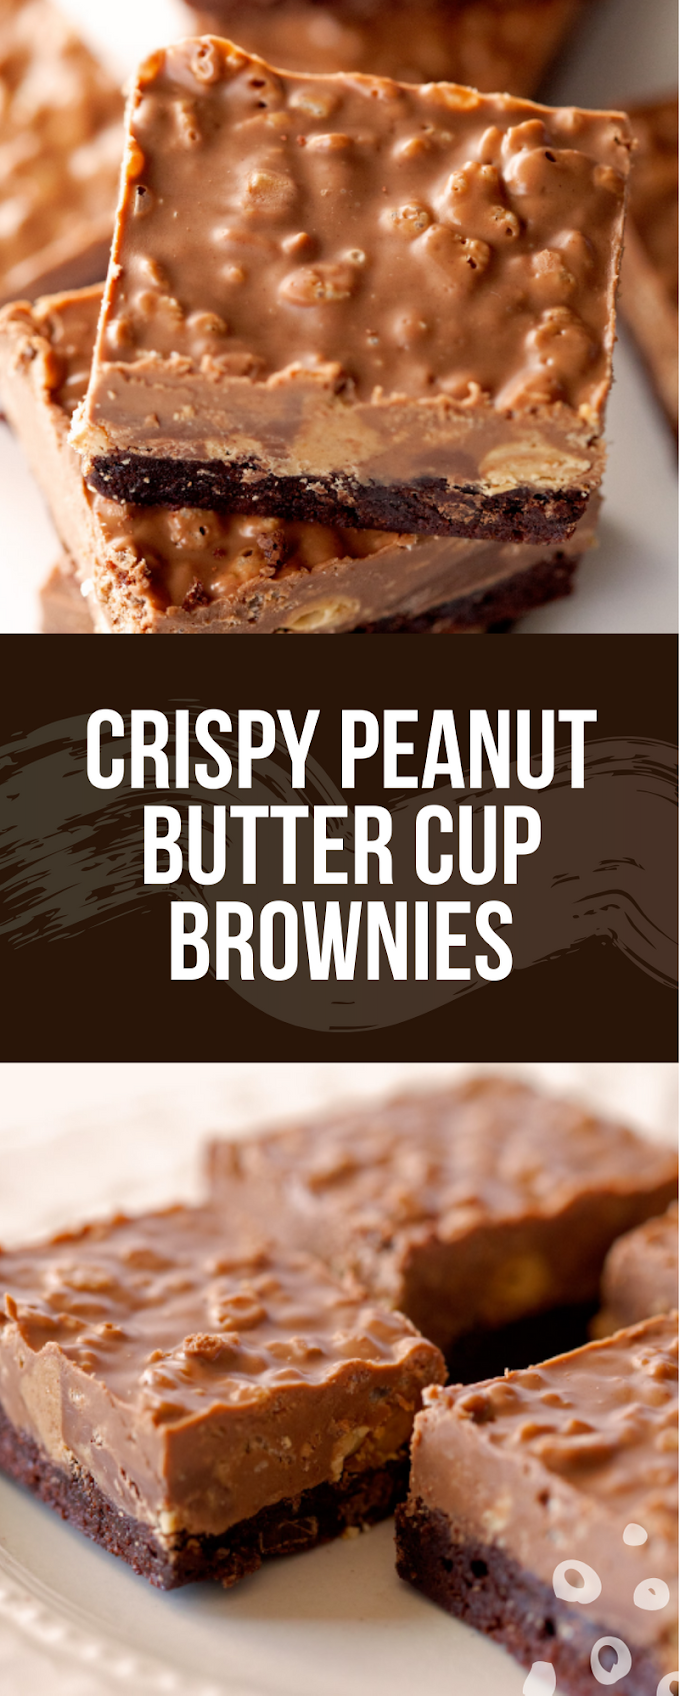 Crispy Peanut Butter Cup Brownies